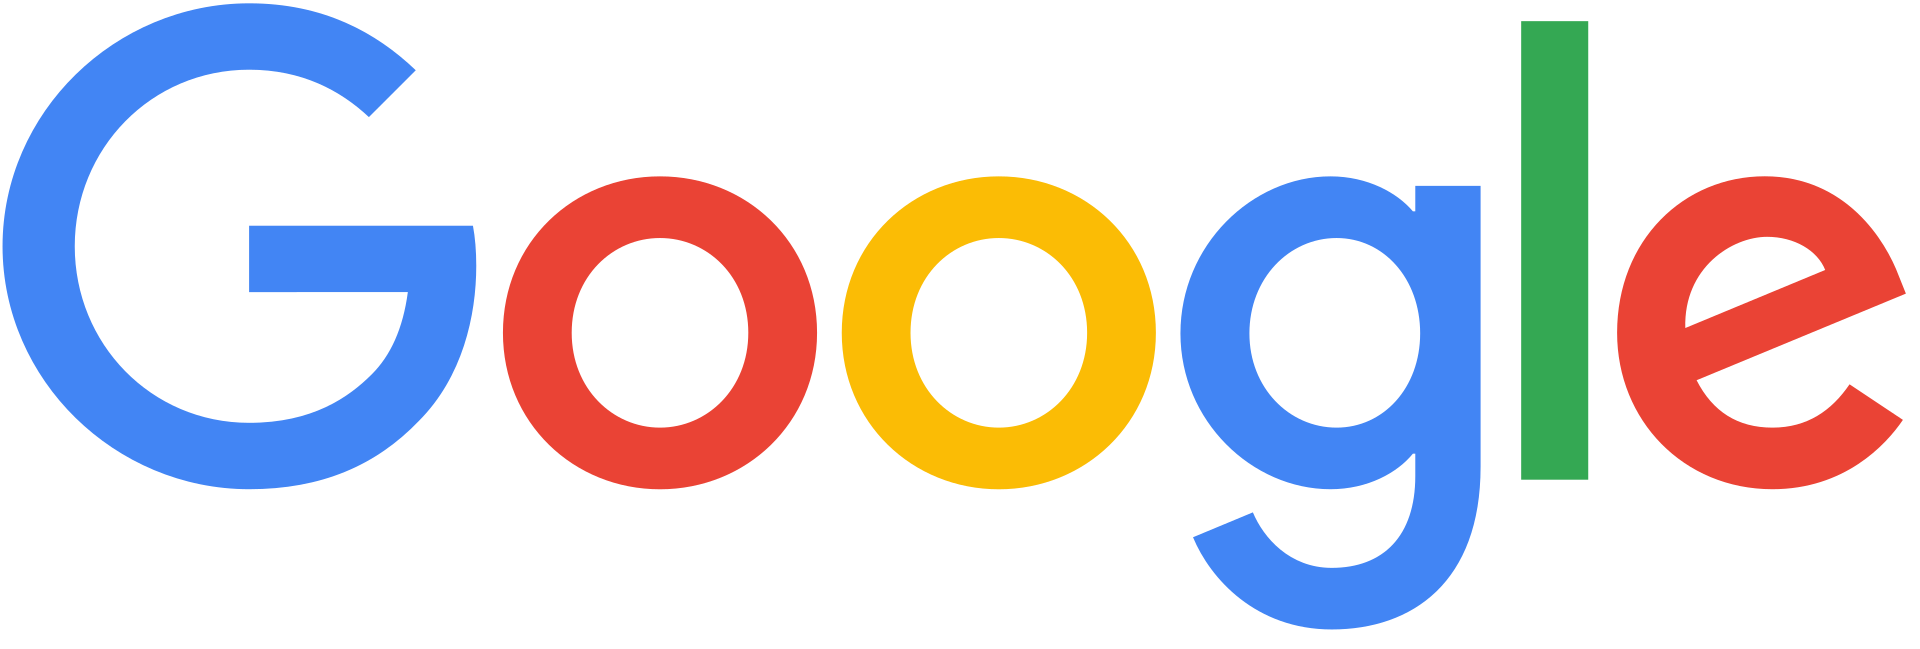 Google 2015 - Logo - 1